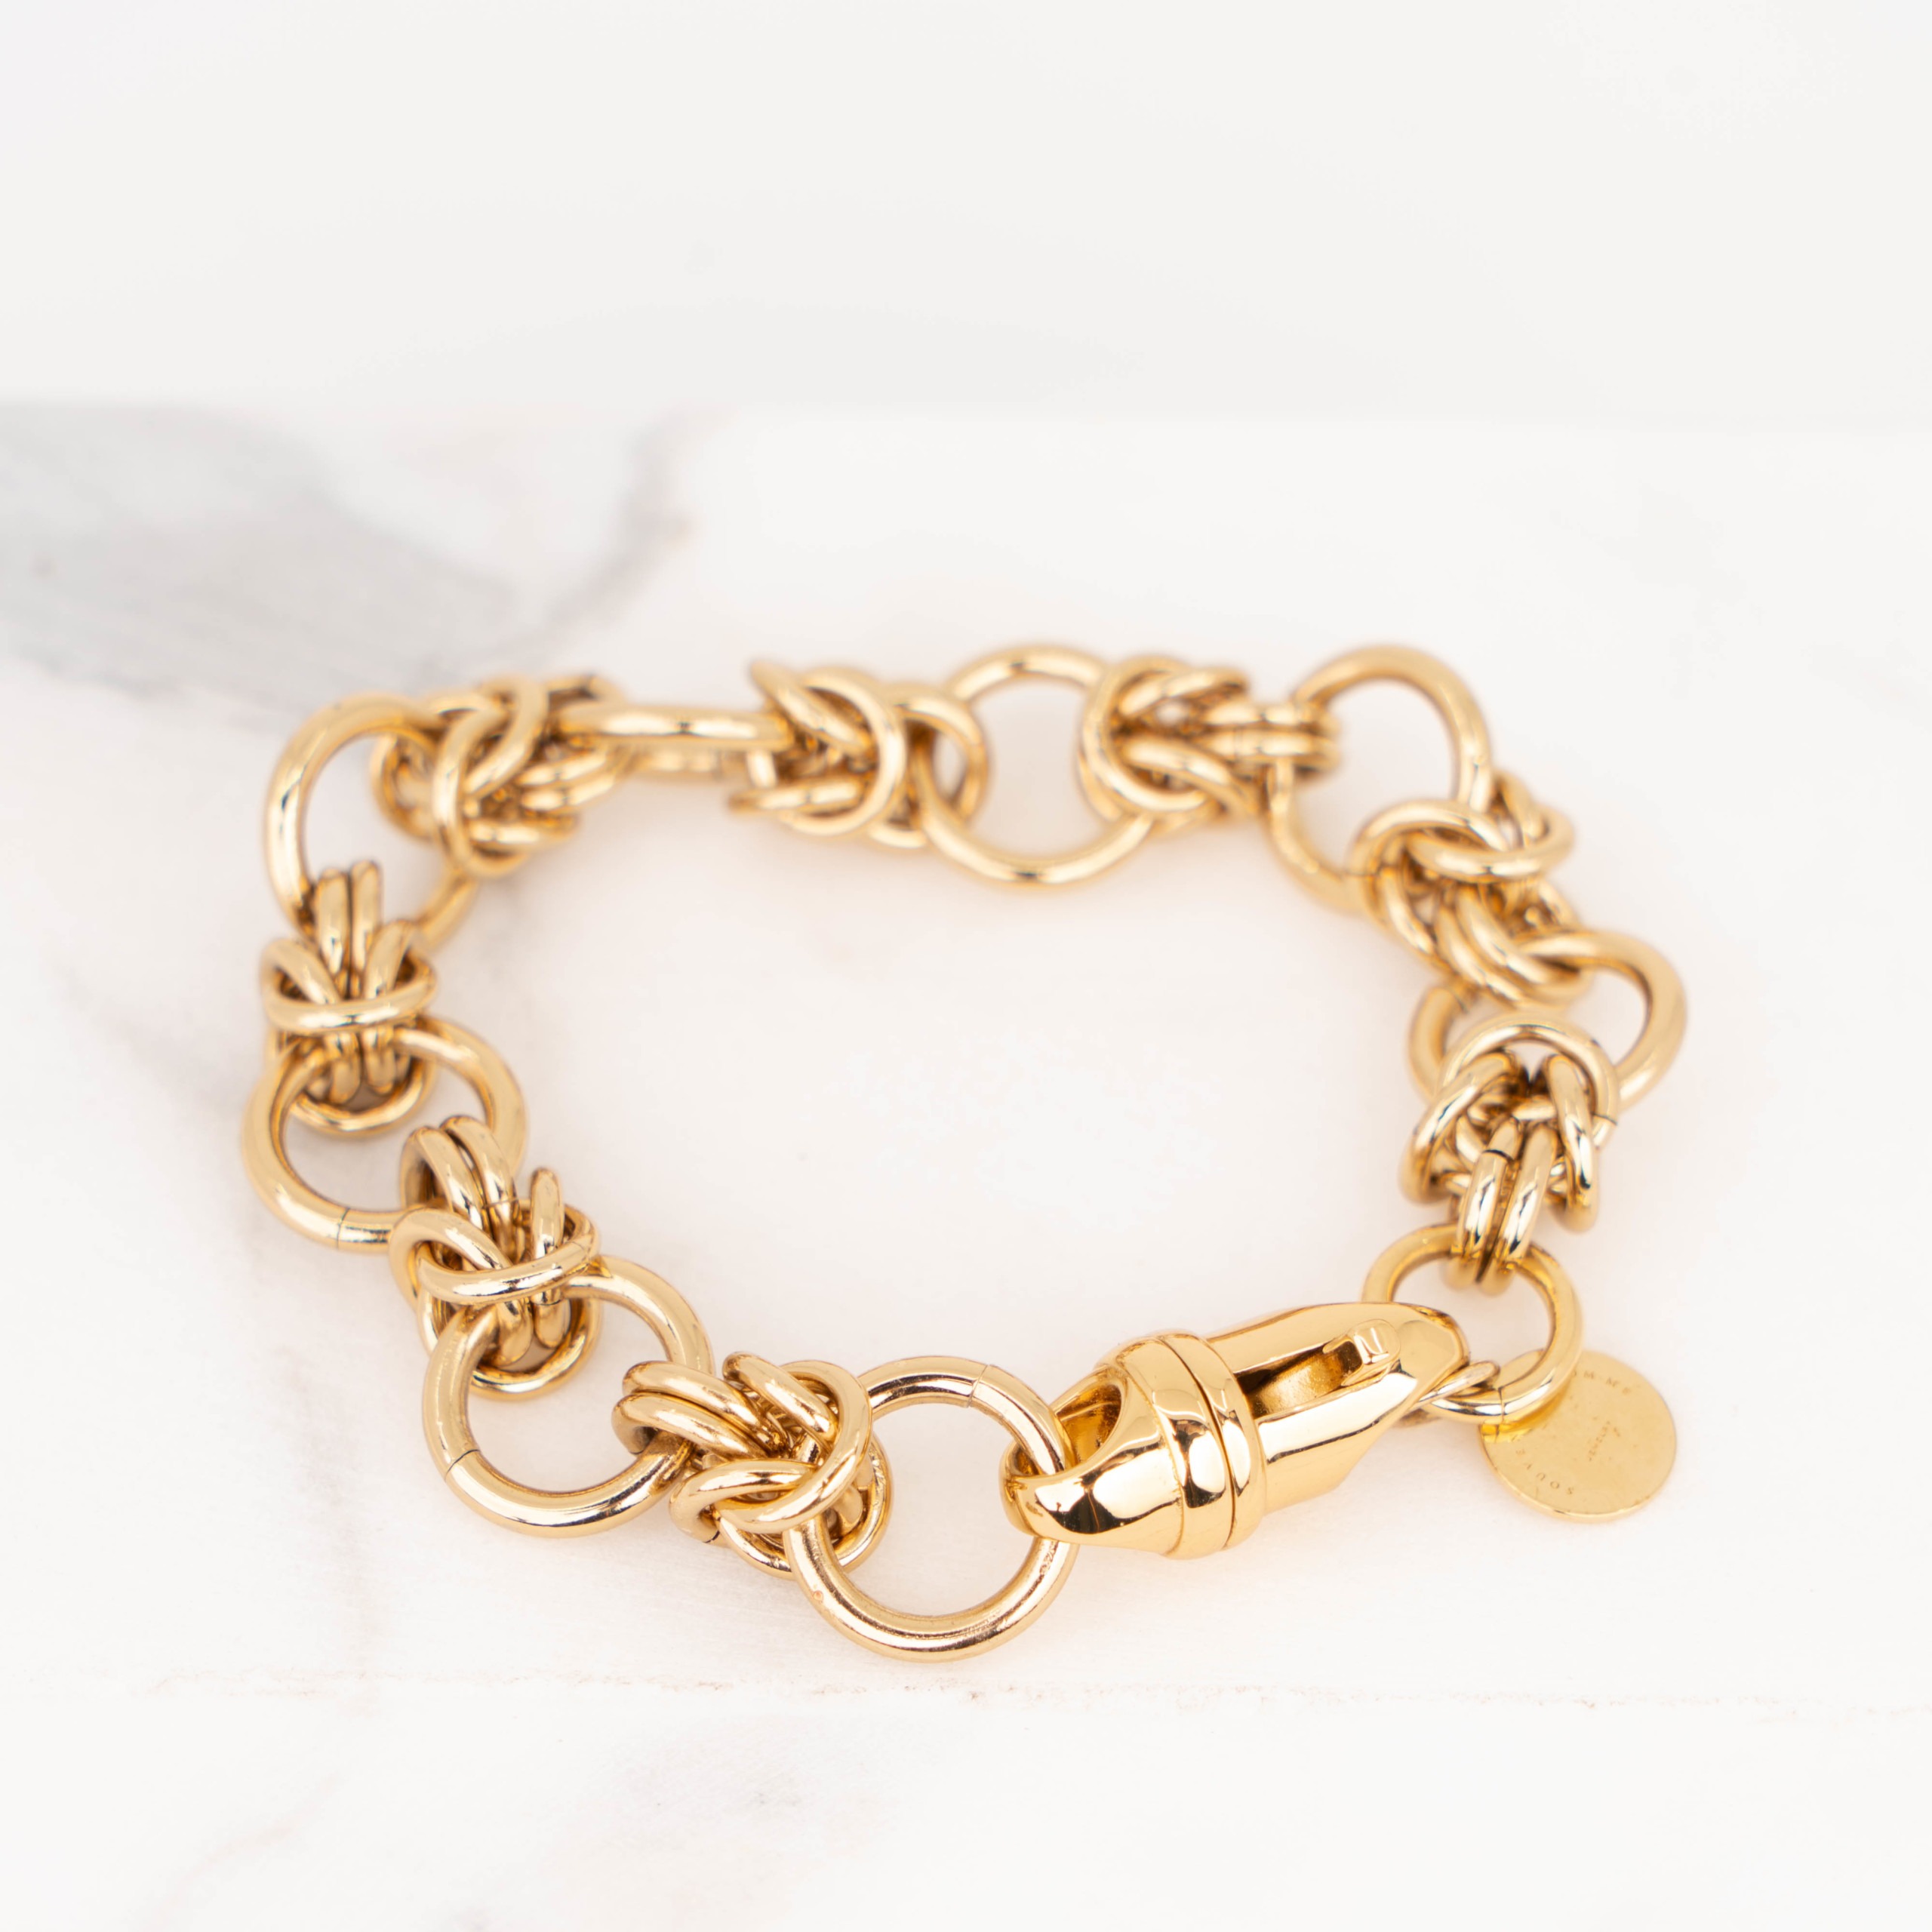 Nicole gold chain bracelet